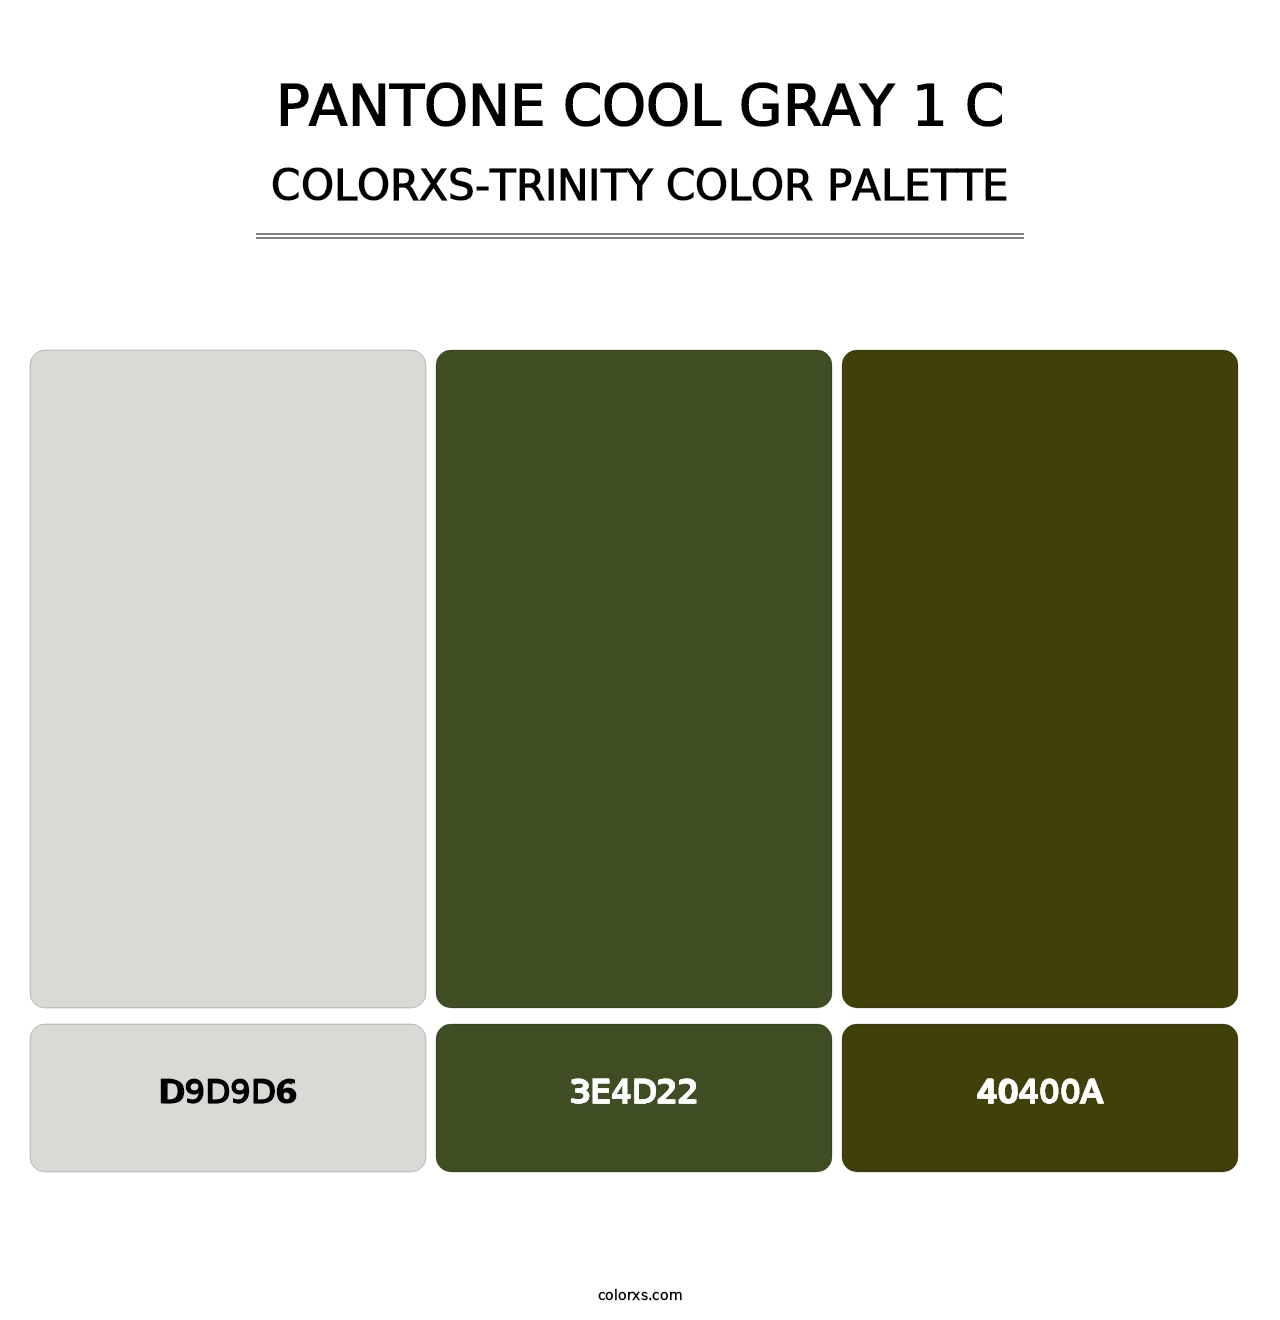 PANTONE Cool Gray 1 C - Colorxs Trinity Palette